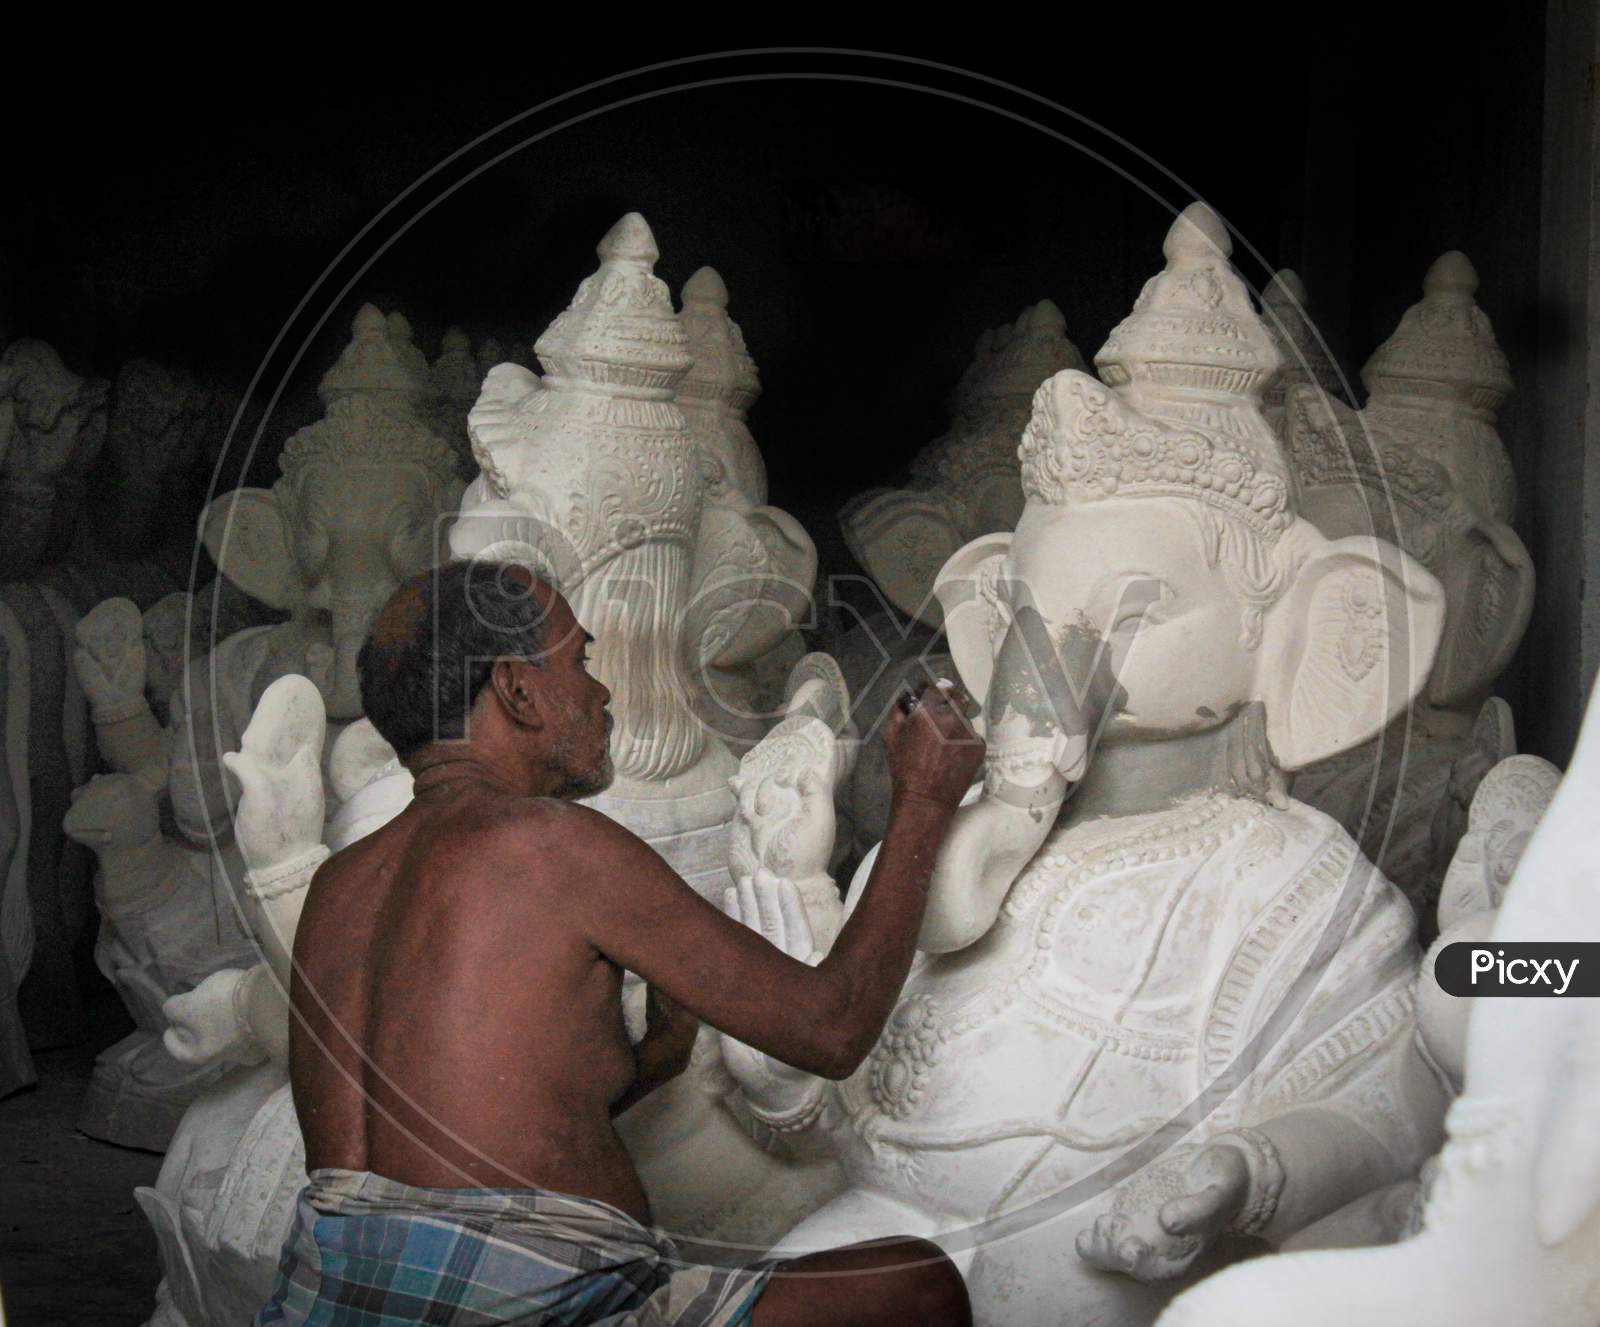 A man working in making of idols